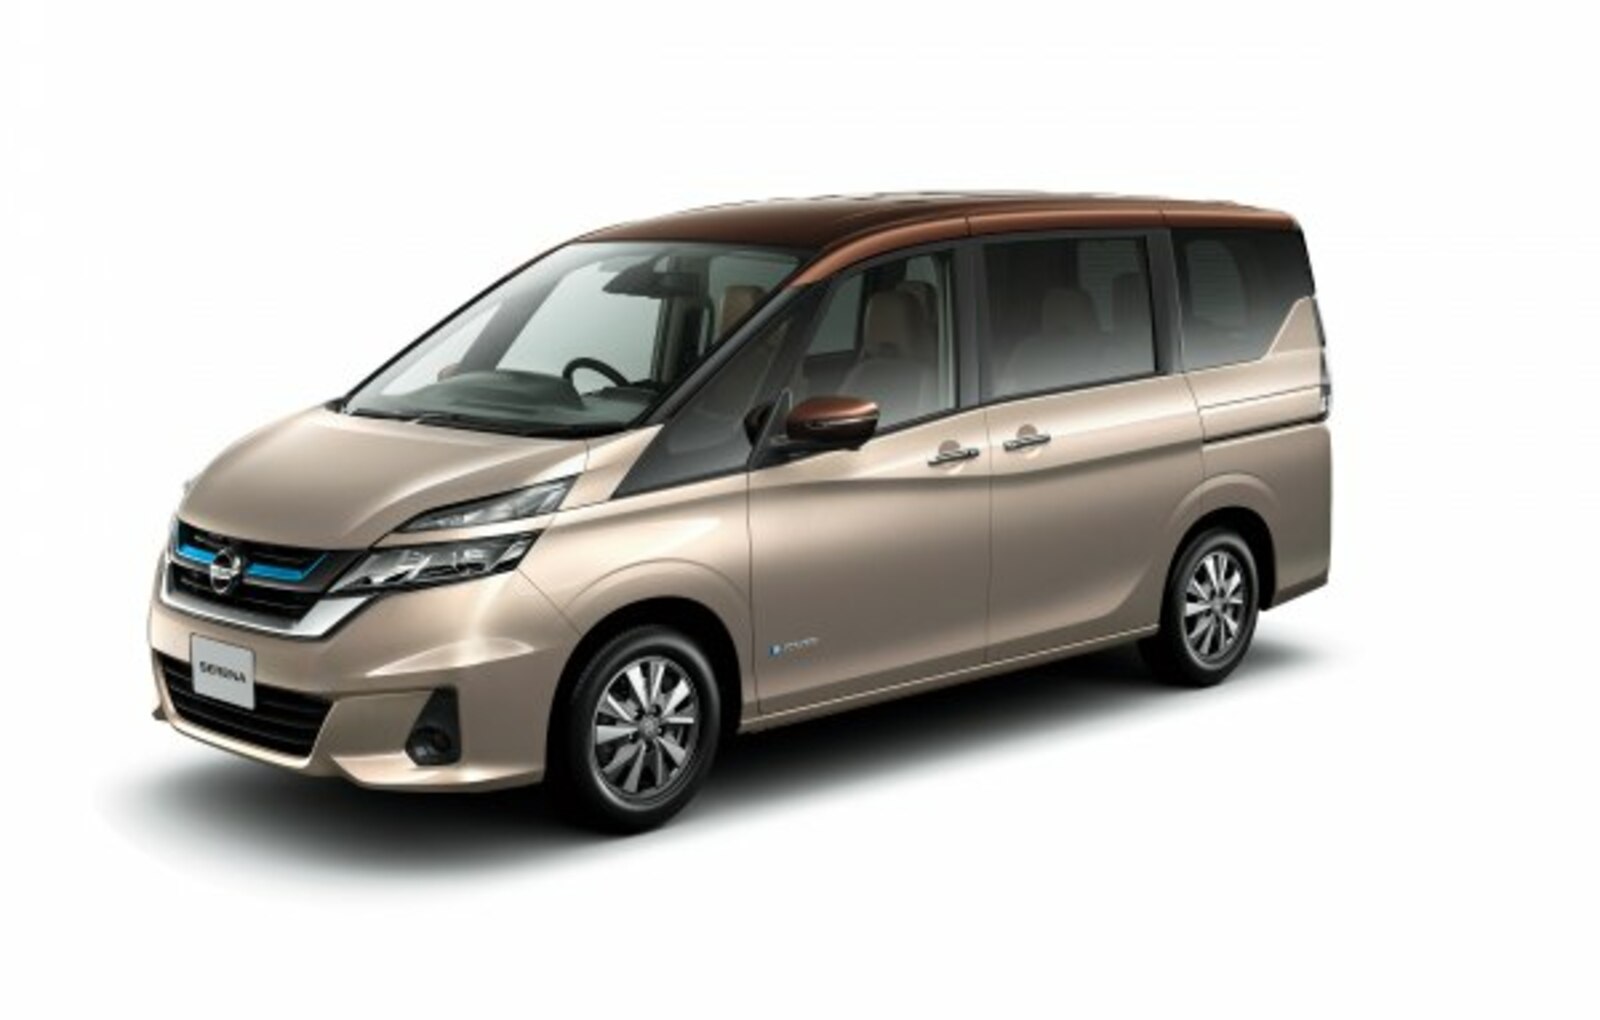 Nissan Serena (C27) Highway Star 2.0 (150 Hp) S-Hybrid AWD CVT 2016, 2017, 2018, 2019, 2020, 2021 